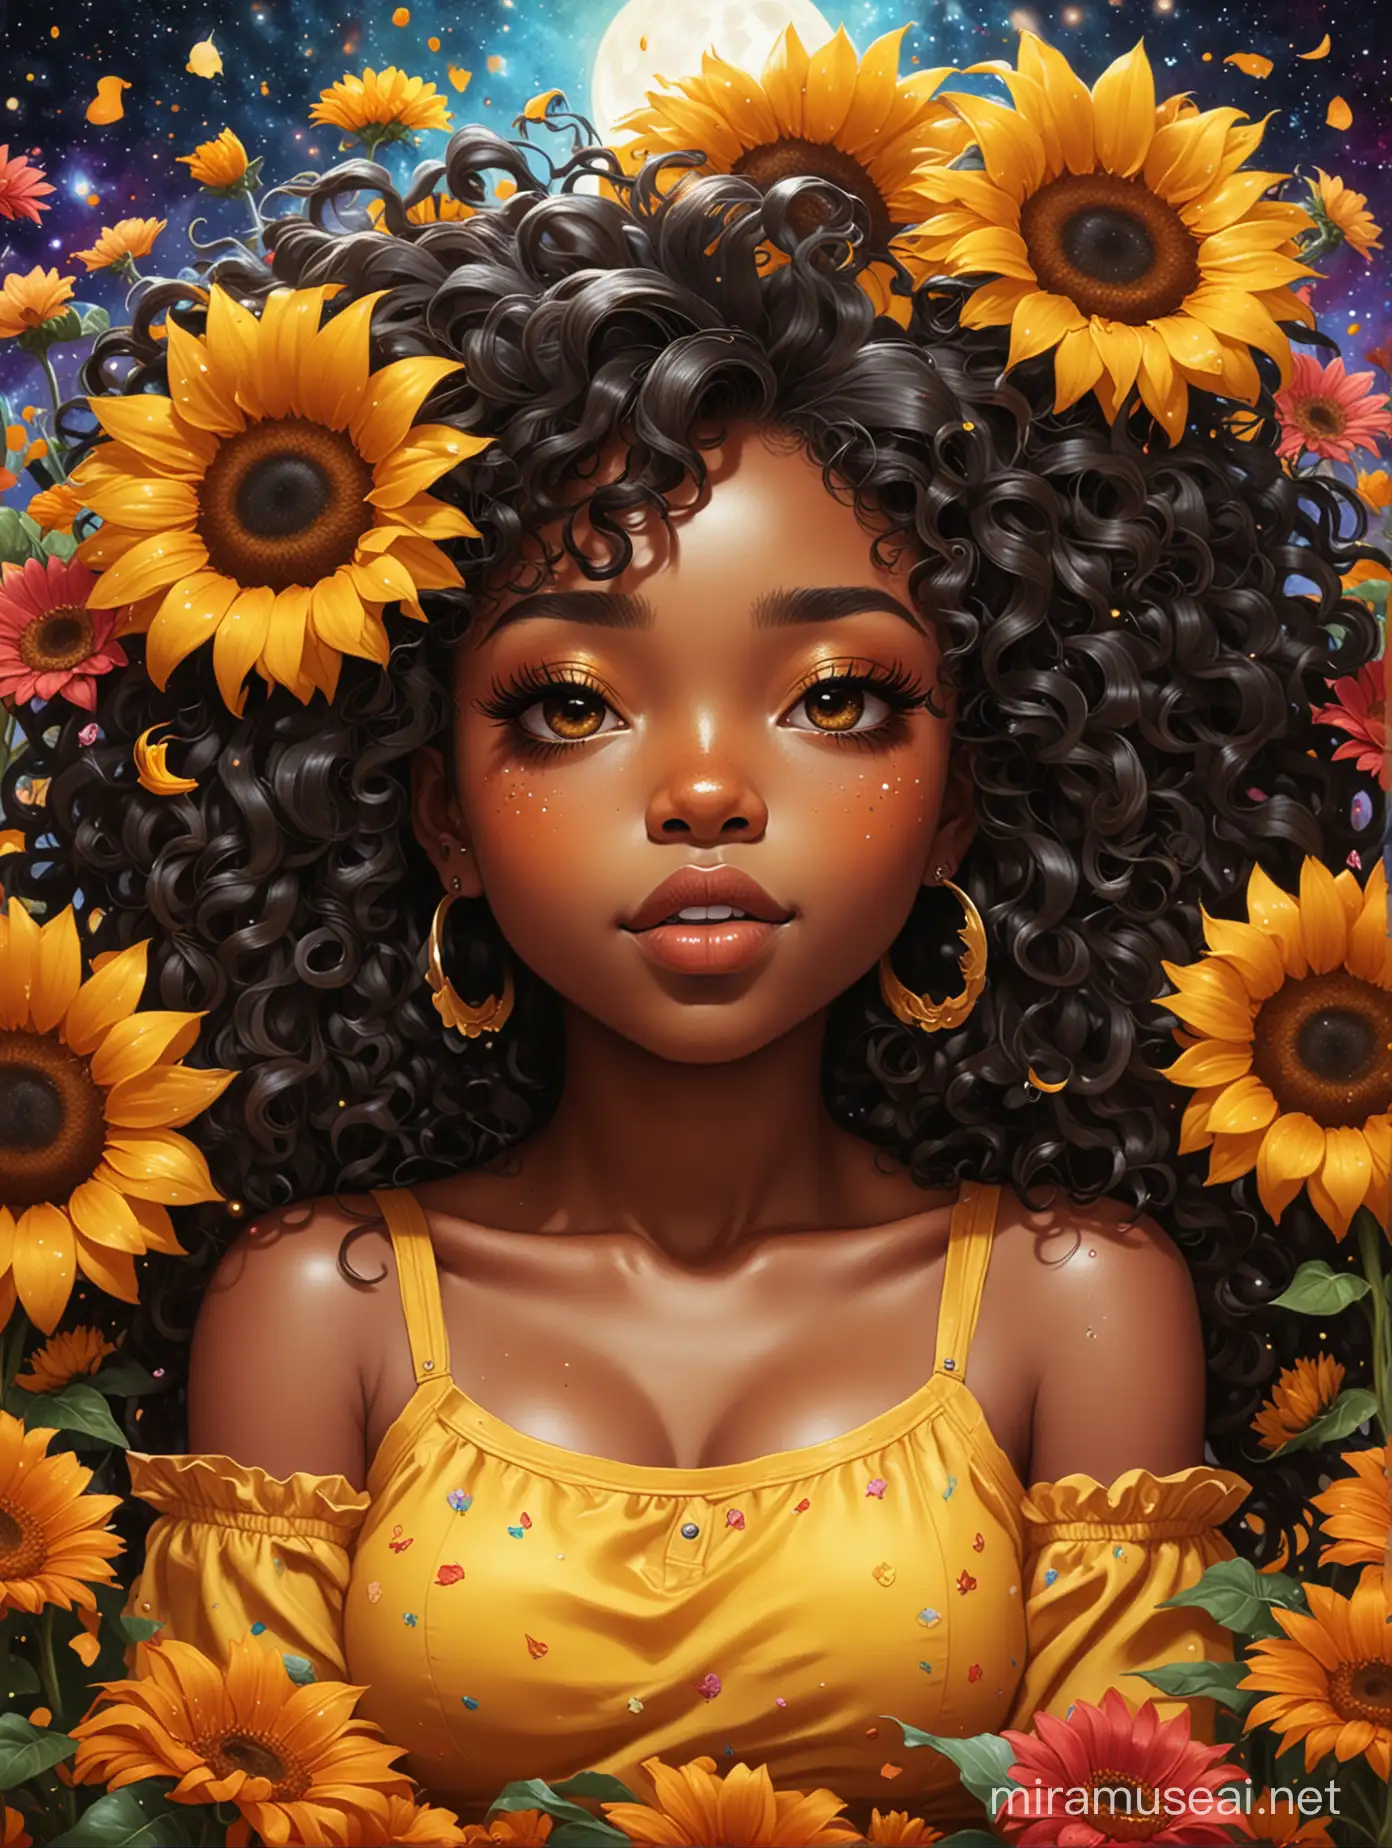 Confident Chibi Leo Girl Lounging Among Sunflowers